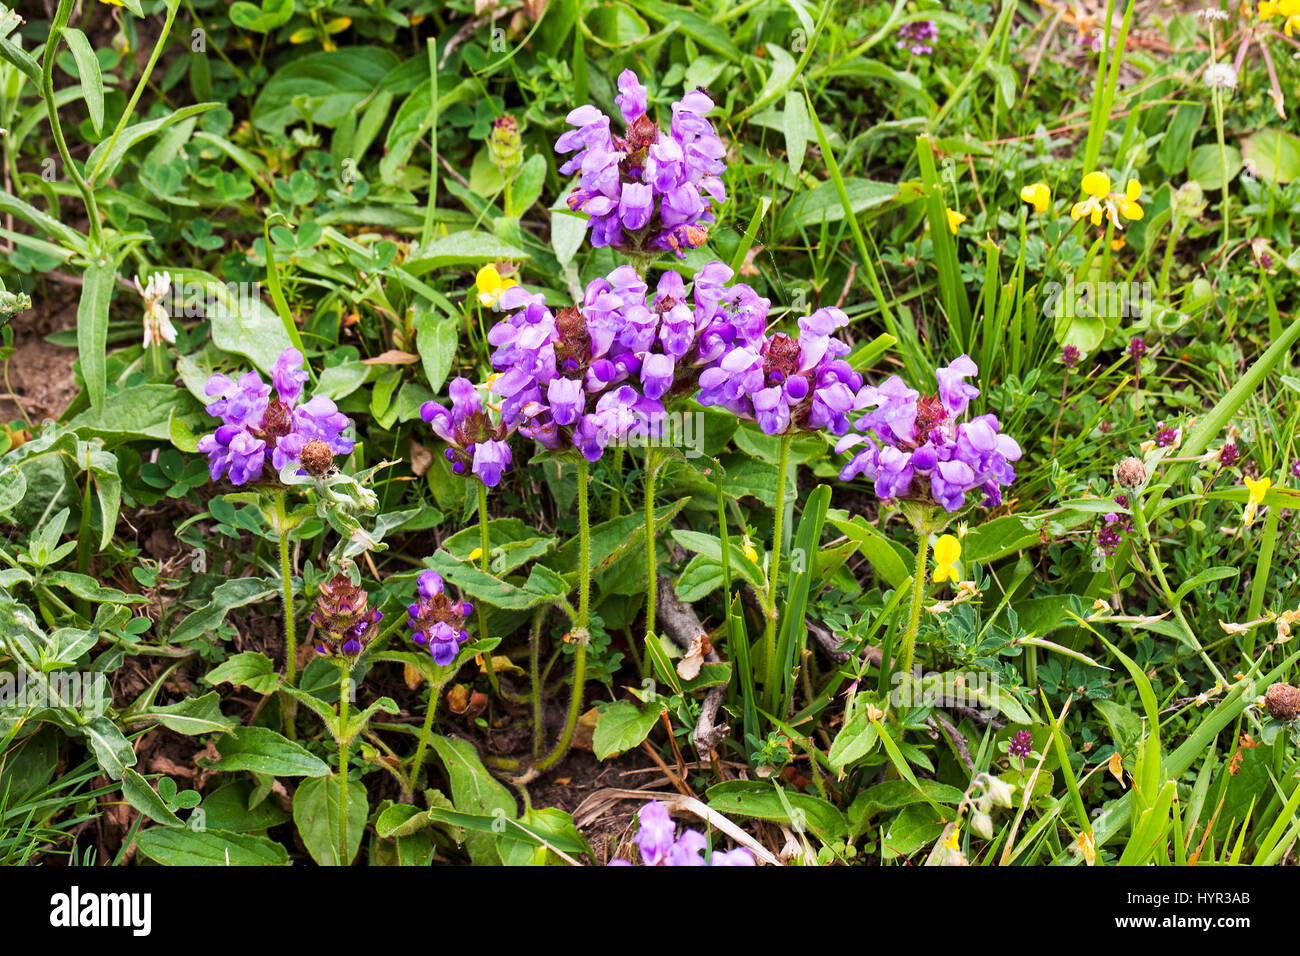 Large self-heal Prunella grandiflora Pyrenees National Park France July 2015 Stock Photo